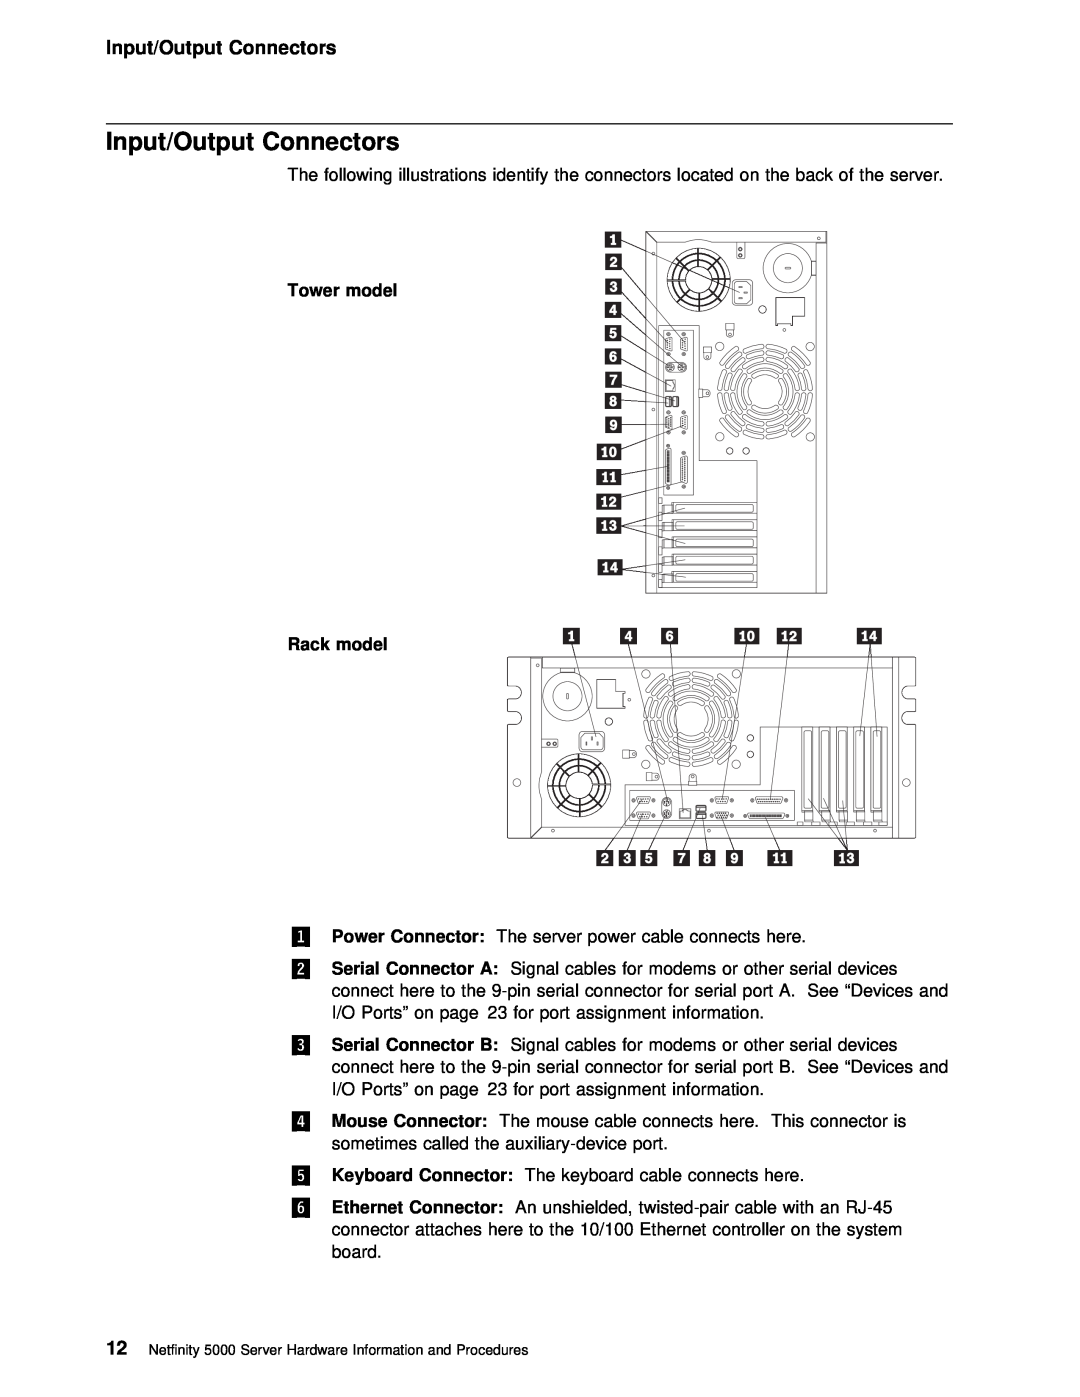 IBM 5000 manual Input/Output Connectors 